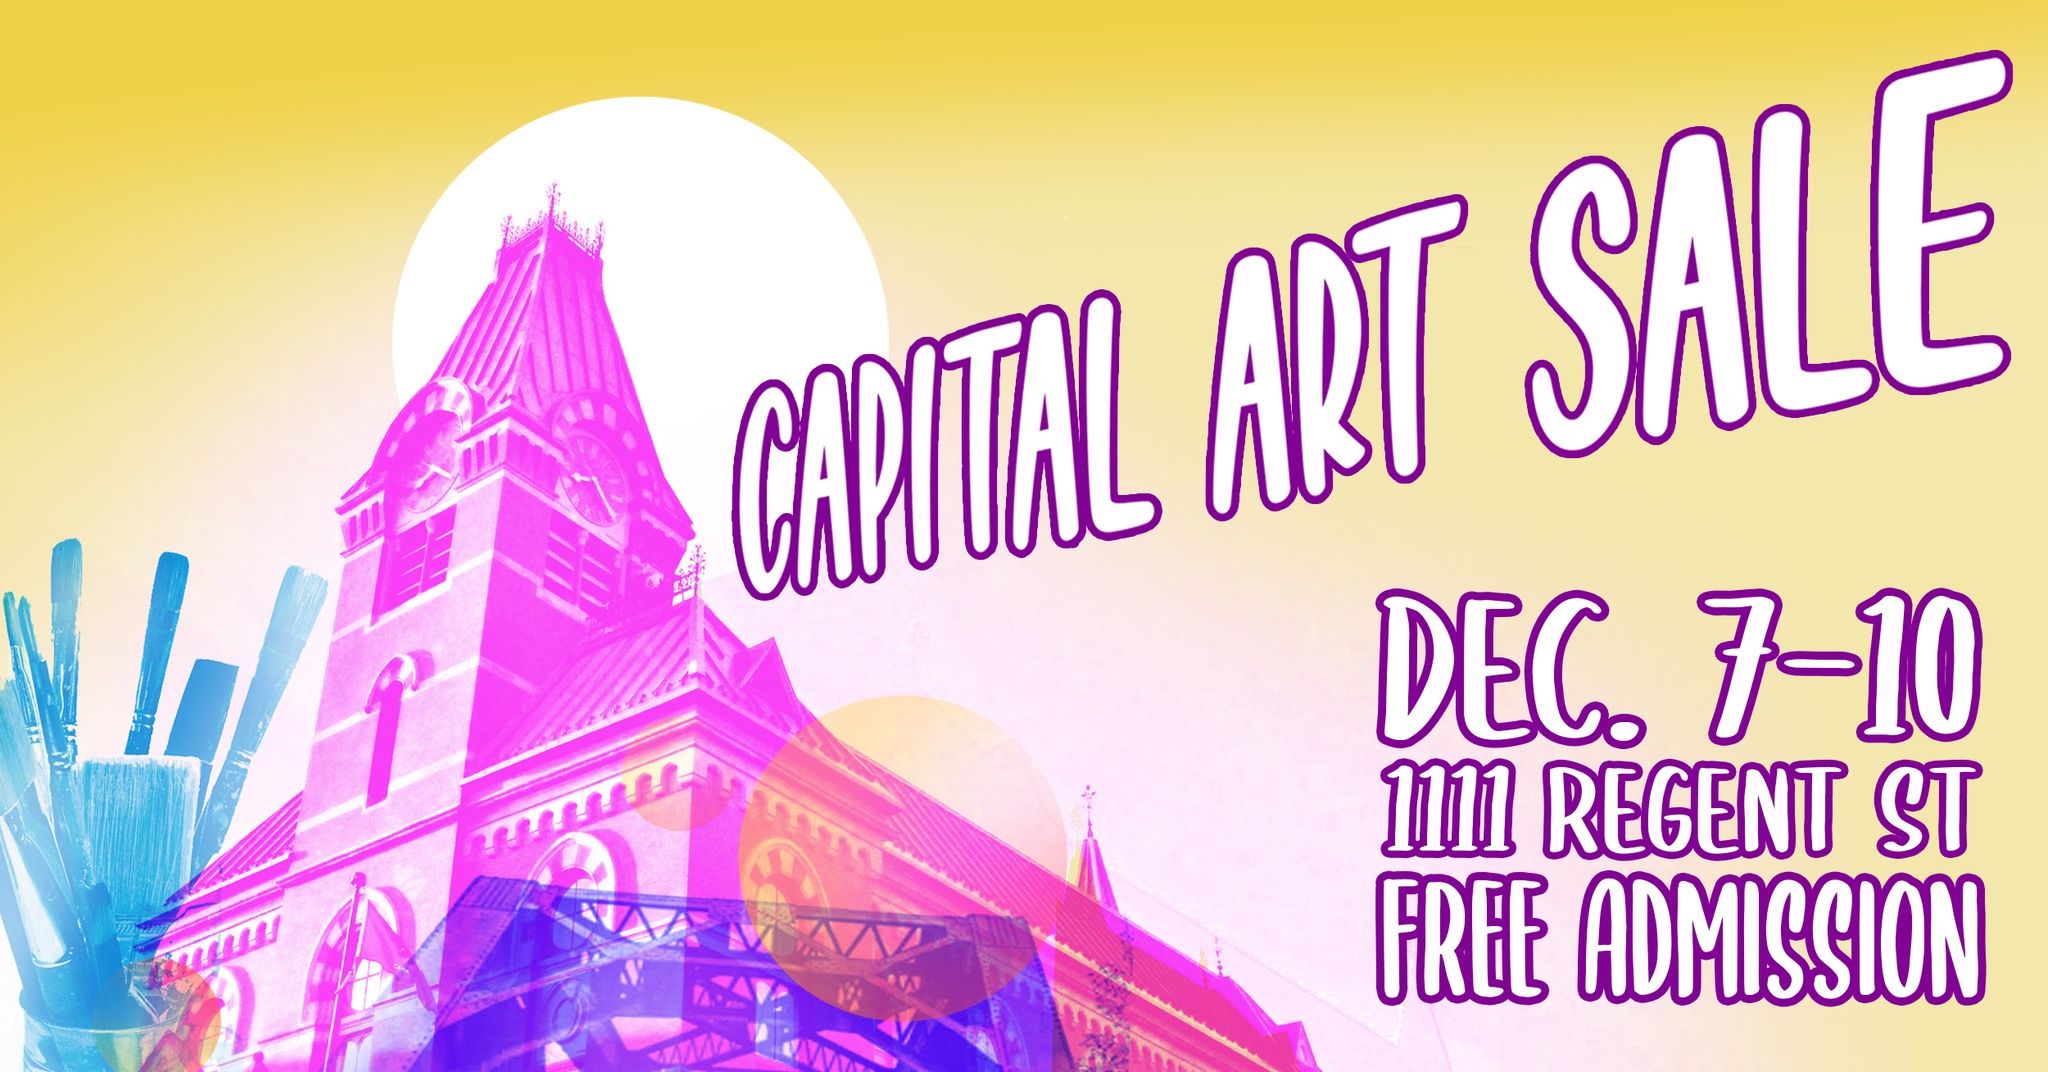 Image of Charlotte Street Arts Centre. Text reads: Capital Art Sale, December 7-10, 1111 Regent St, Free Admission